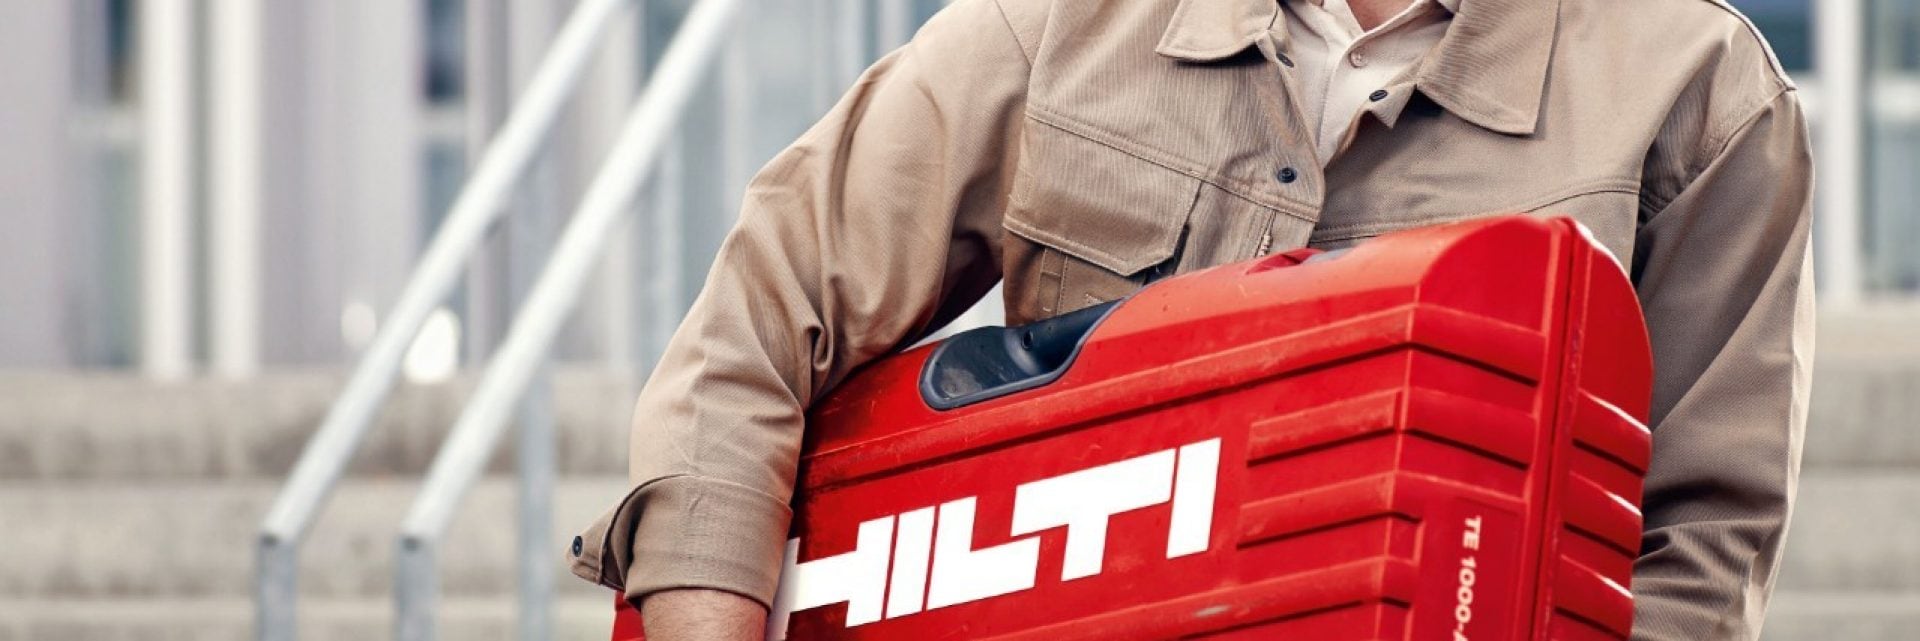 Hilti tool box